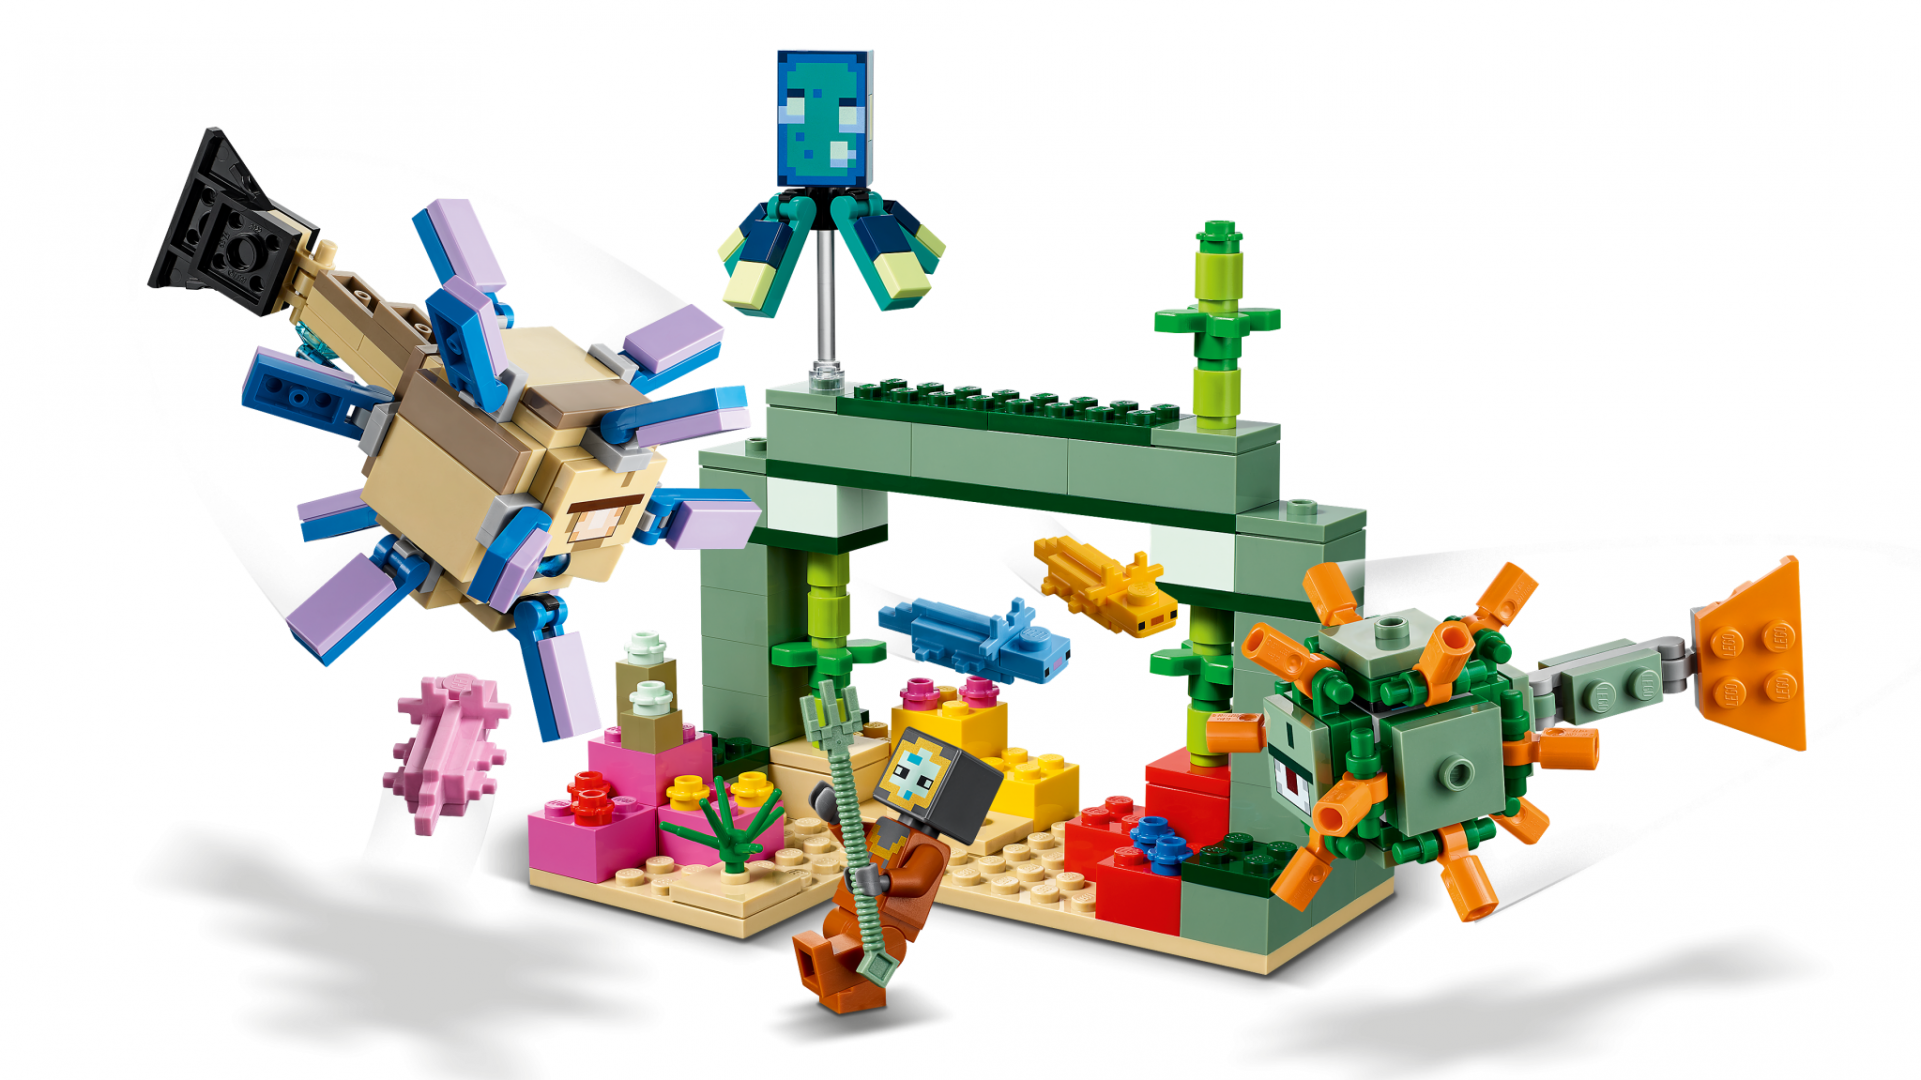 Set de constructie Lego, Batalia pazitorilor, 21180